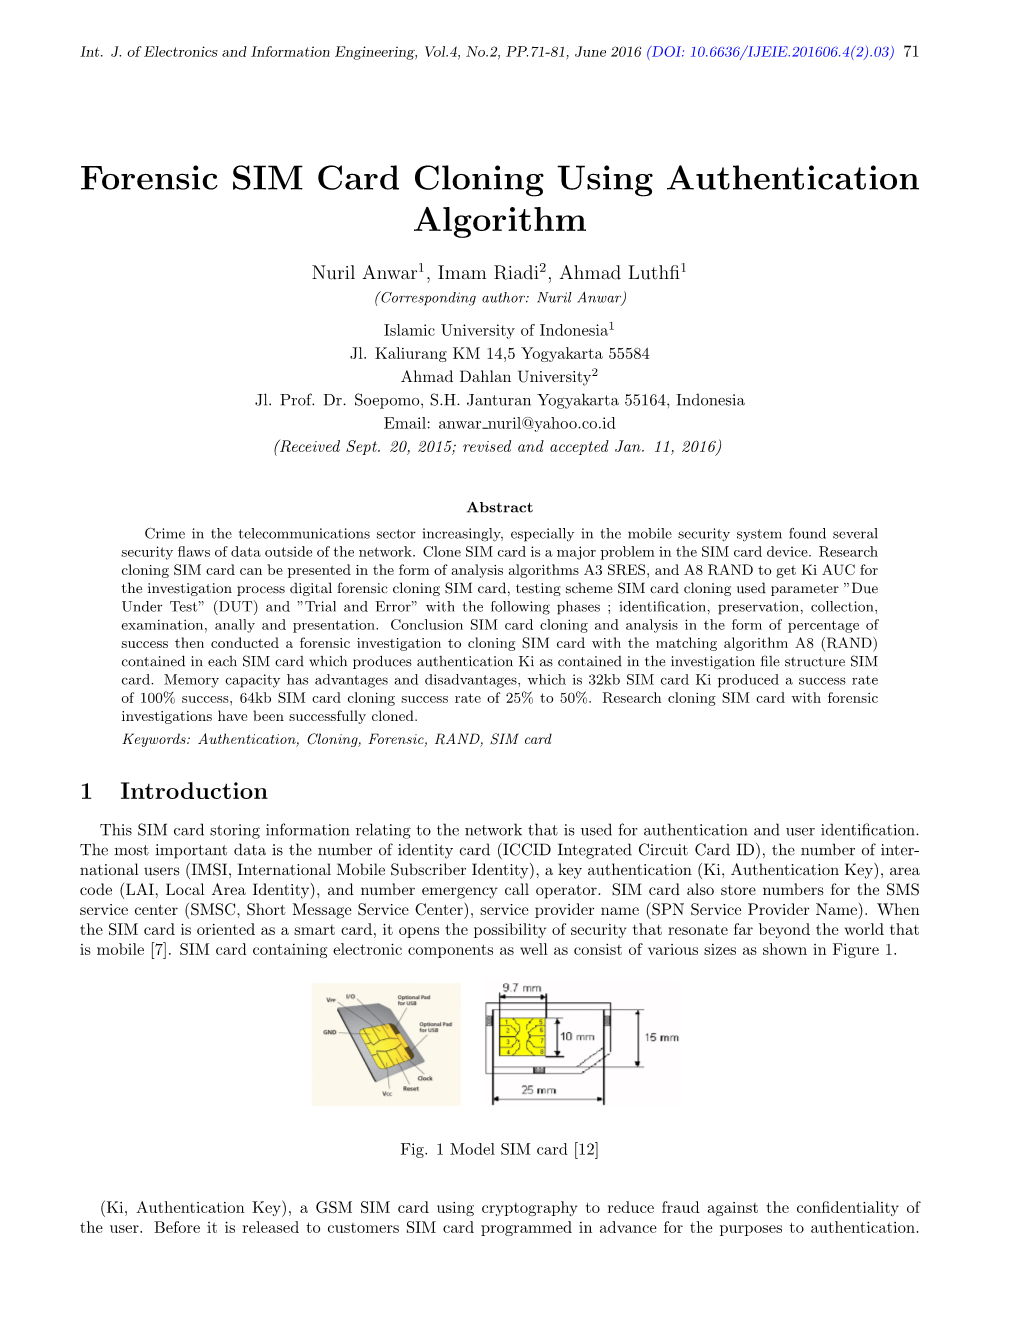 Forensic SIM Card Cloning Using Authentication Algorithm